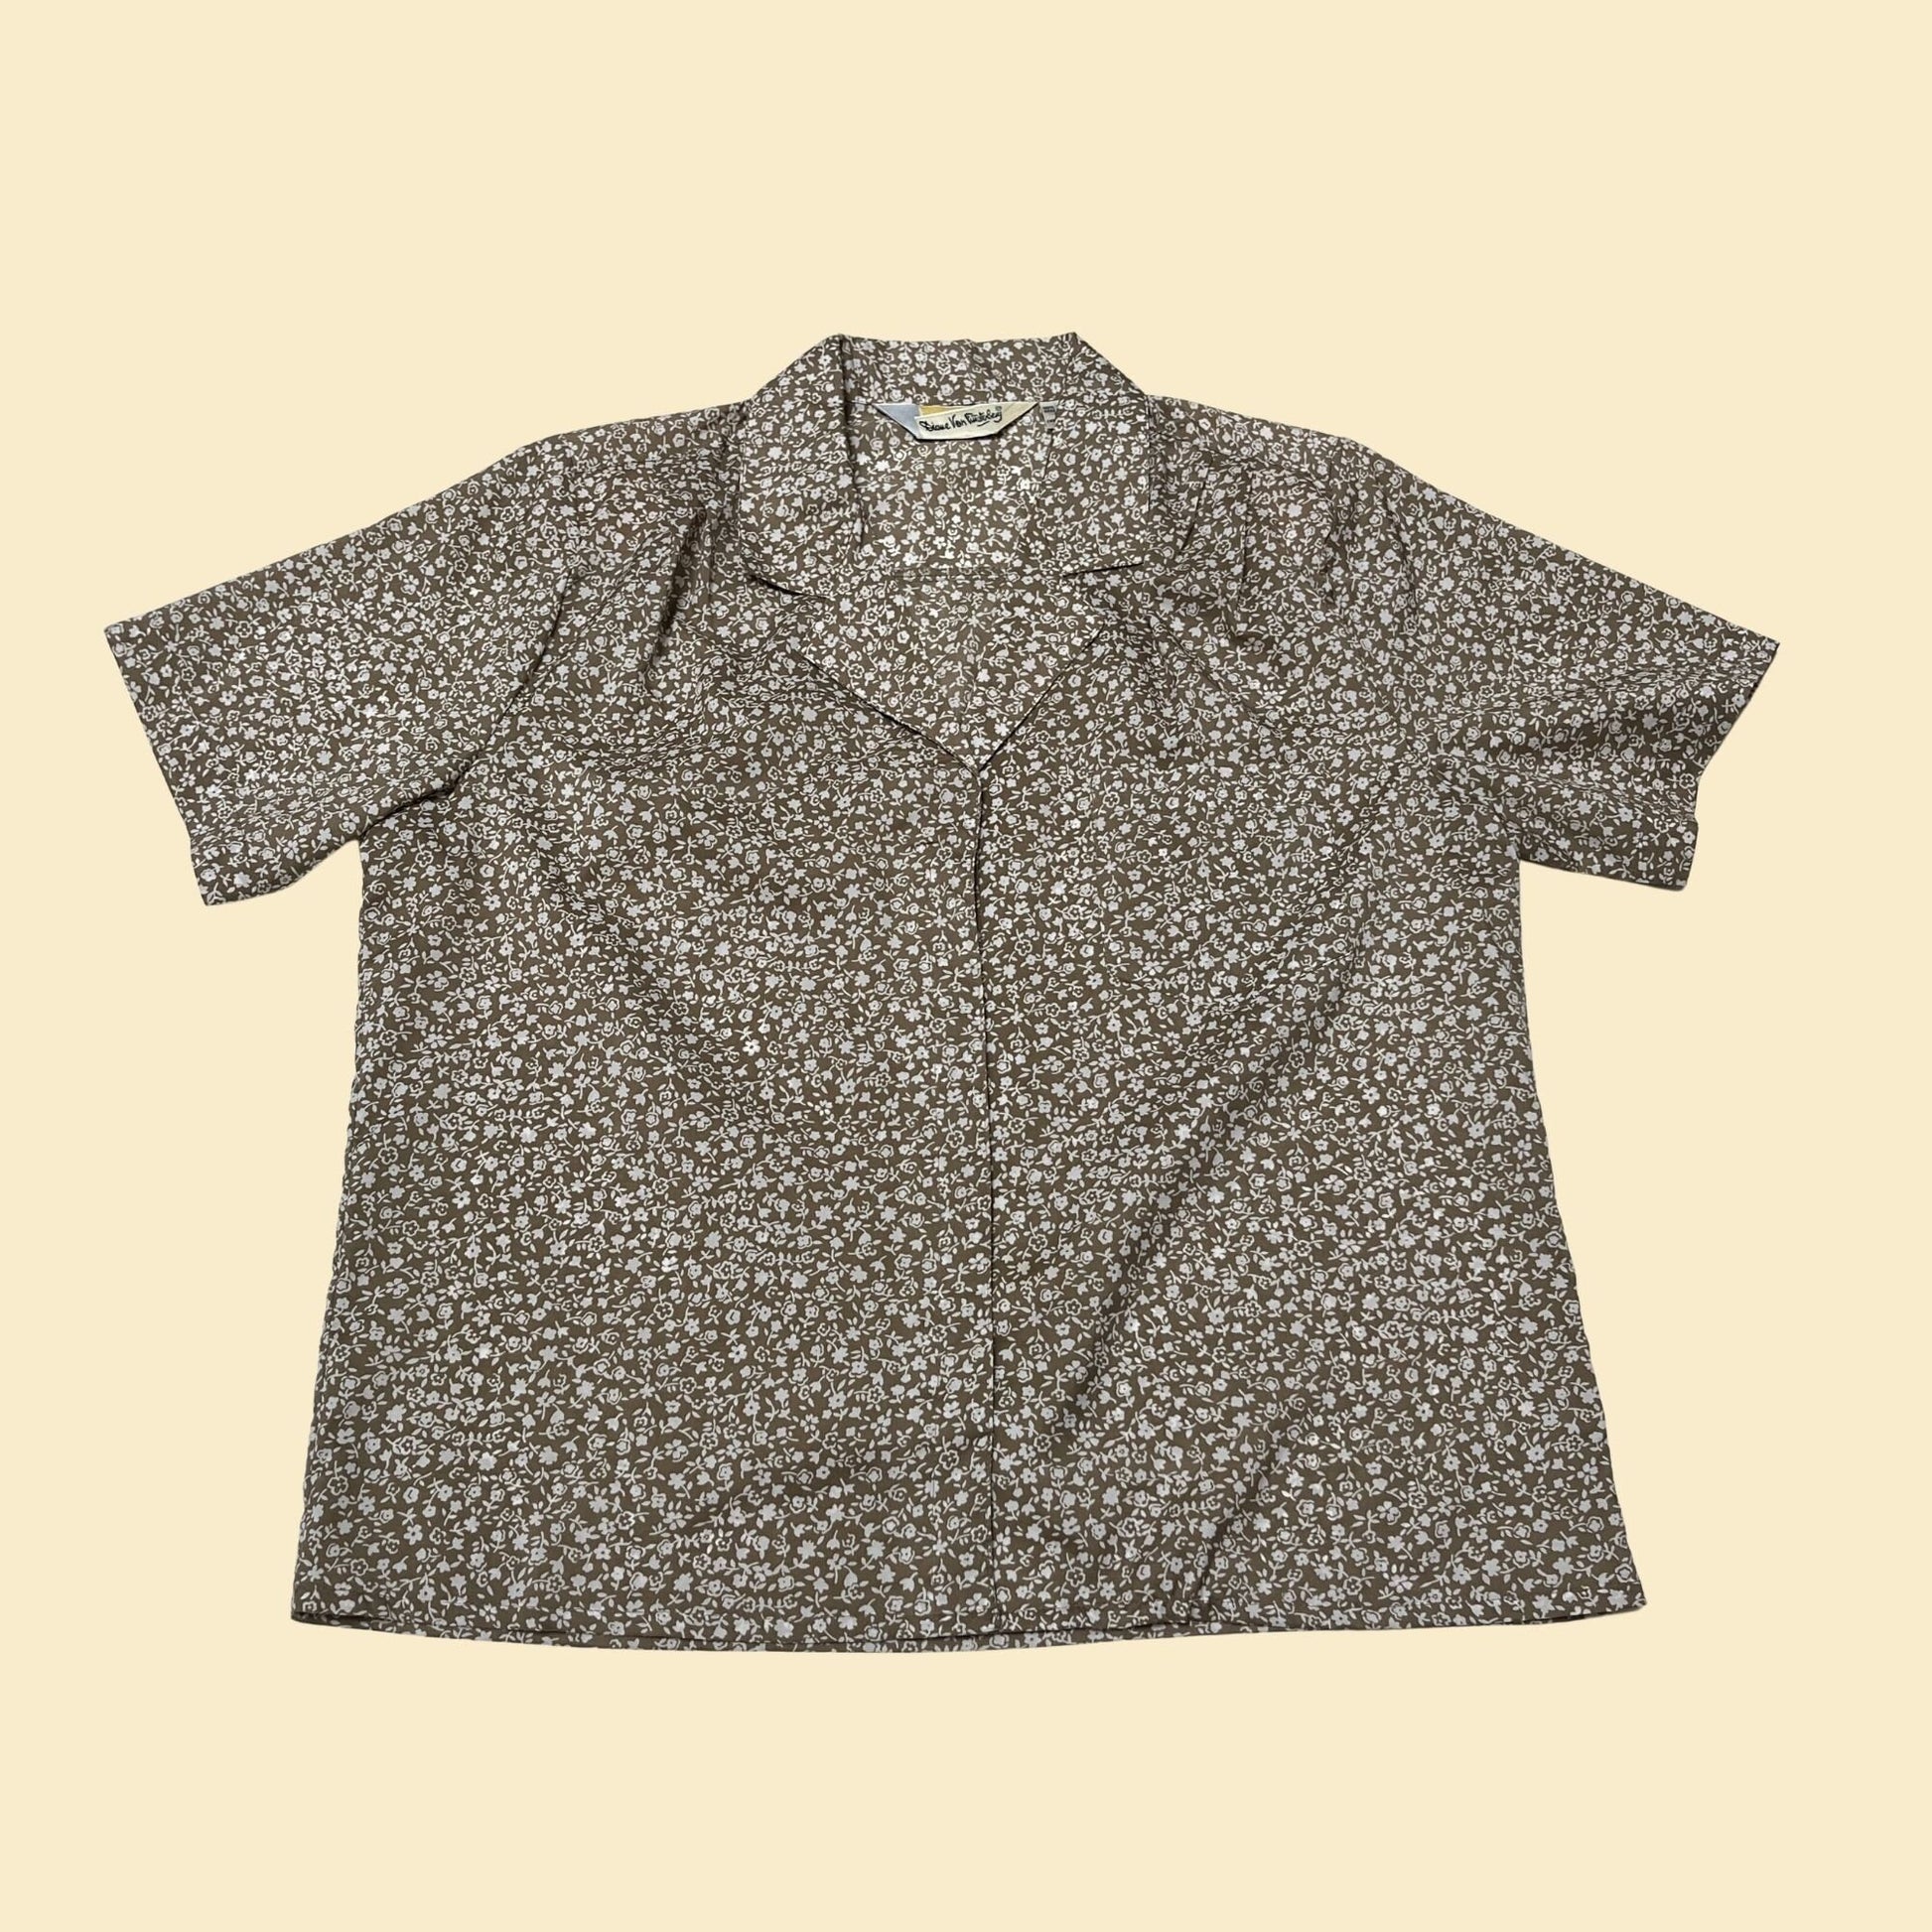 80s Diane Von Furstenberg blouse, vintage olive green and white floral button down, 1980s flower pattern shirt